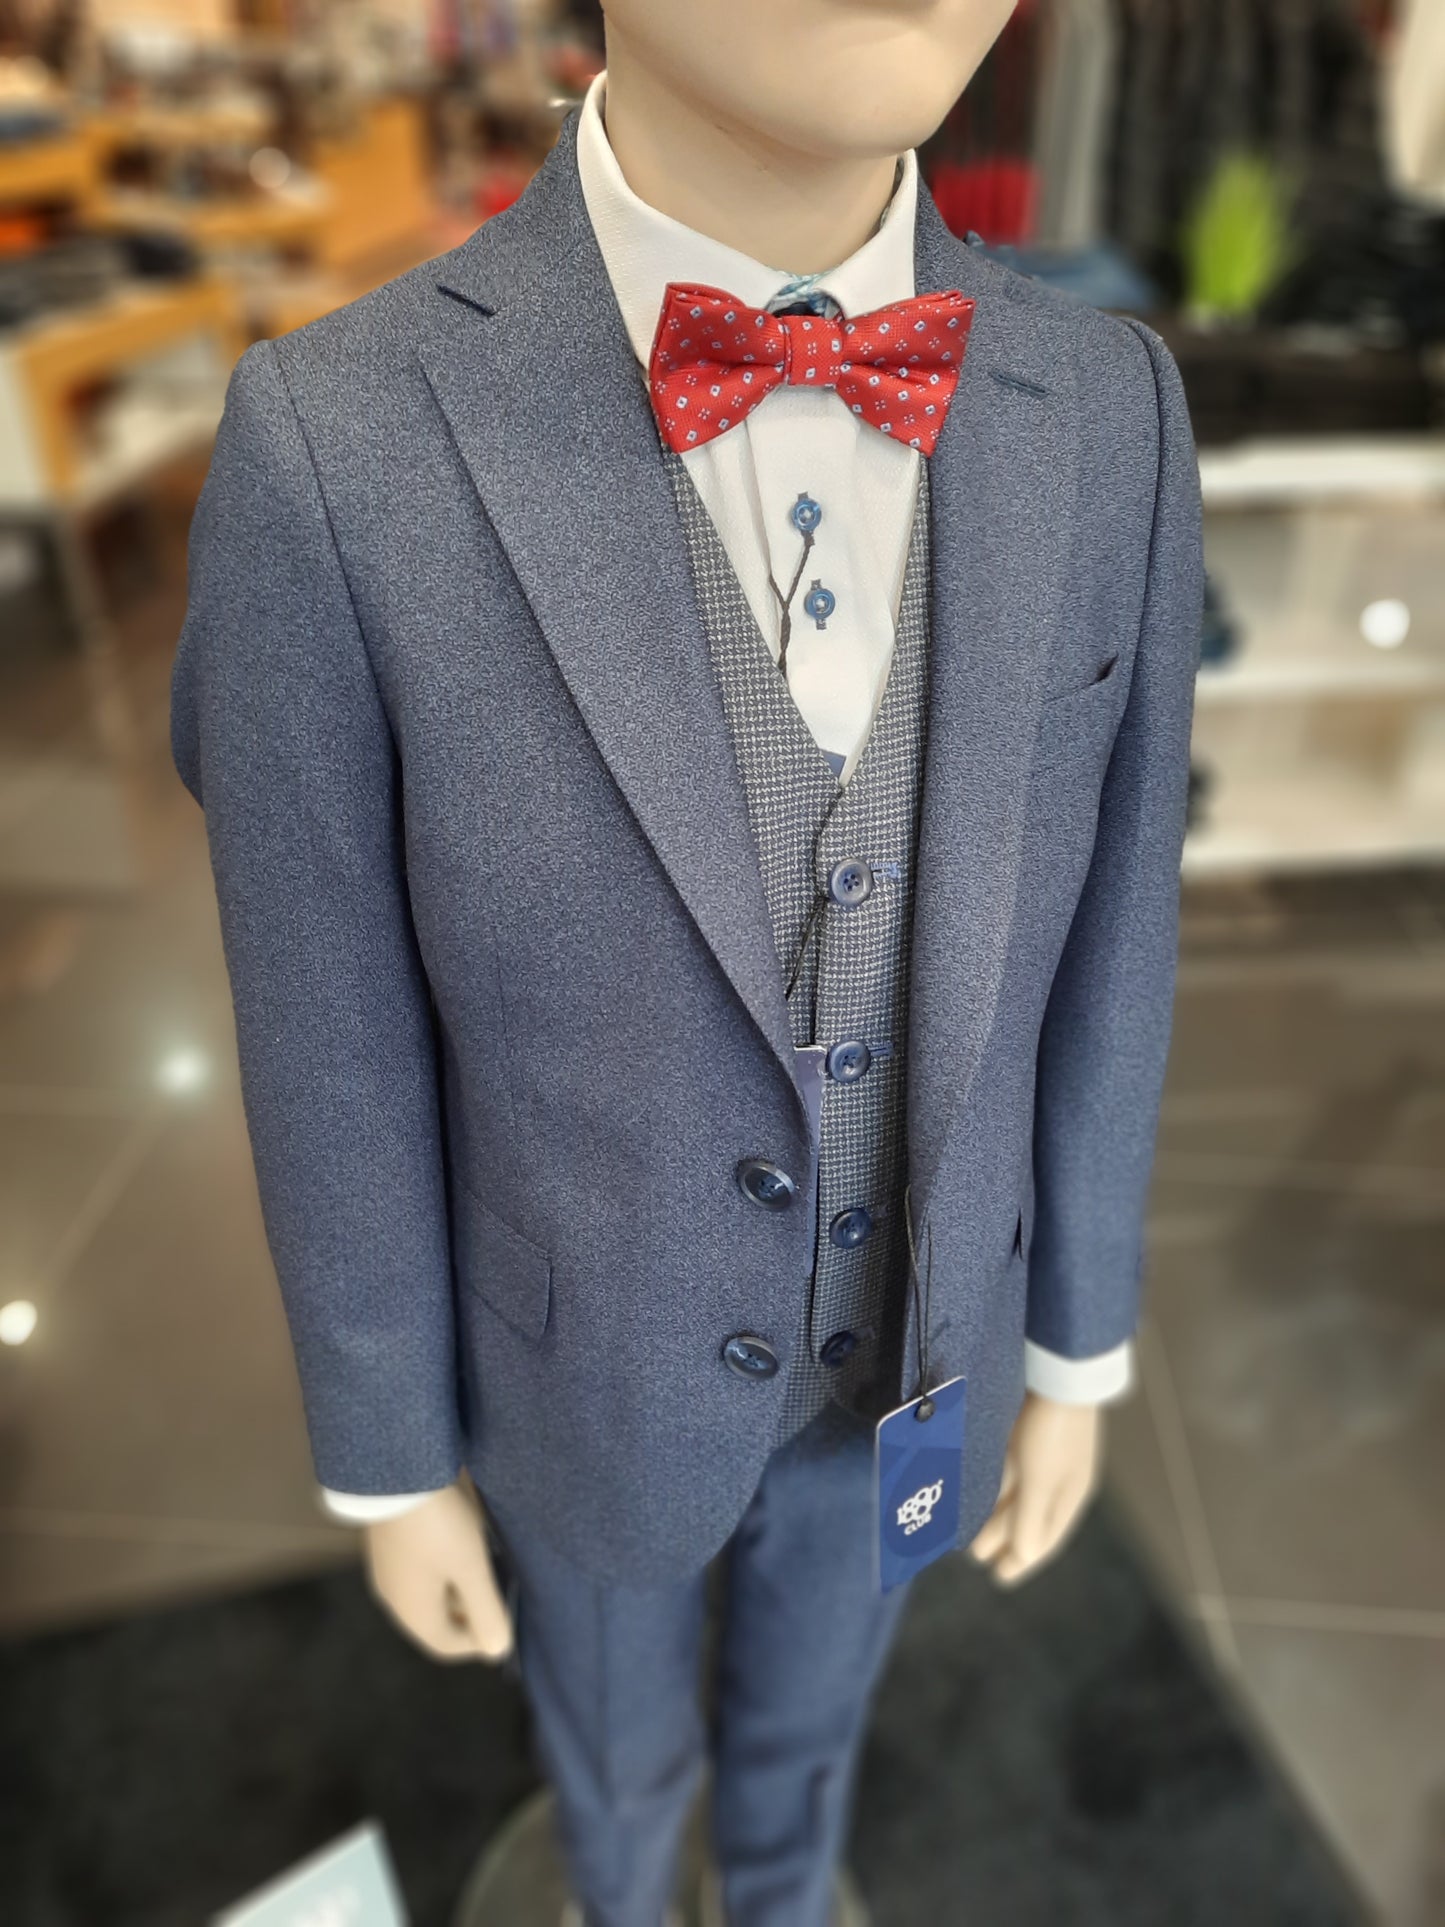 1880 Club Boys Junior Suit Jacket - Tivoli 15120 Blue 29